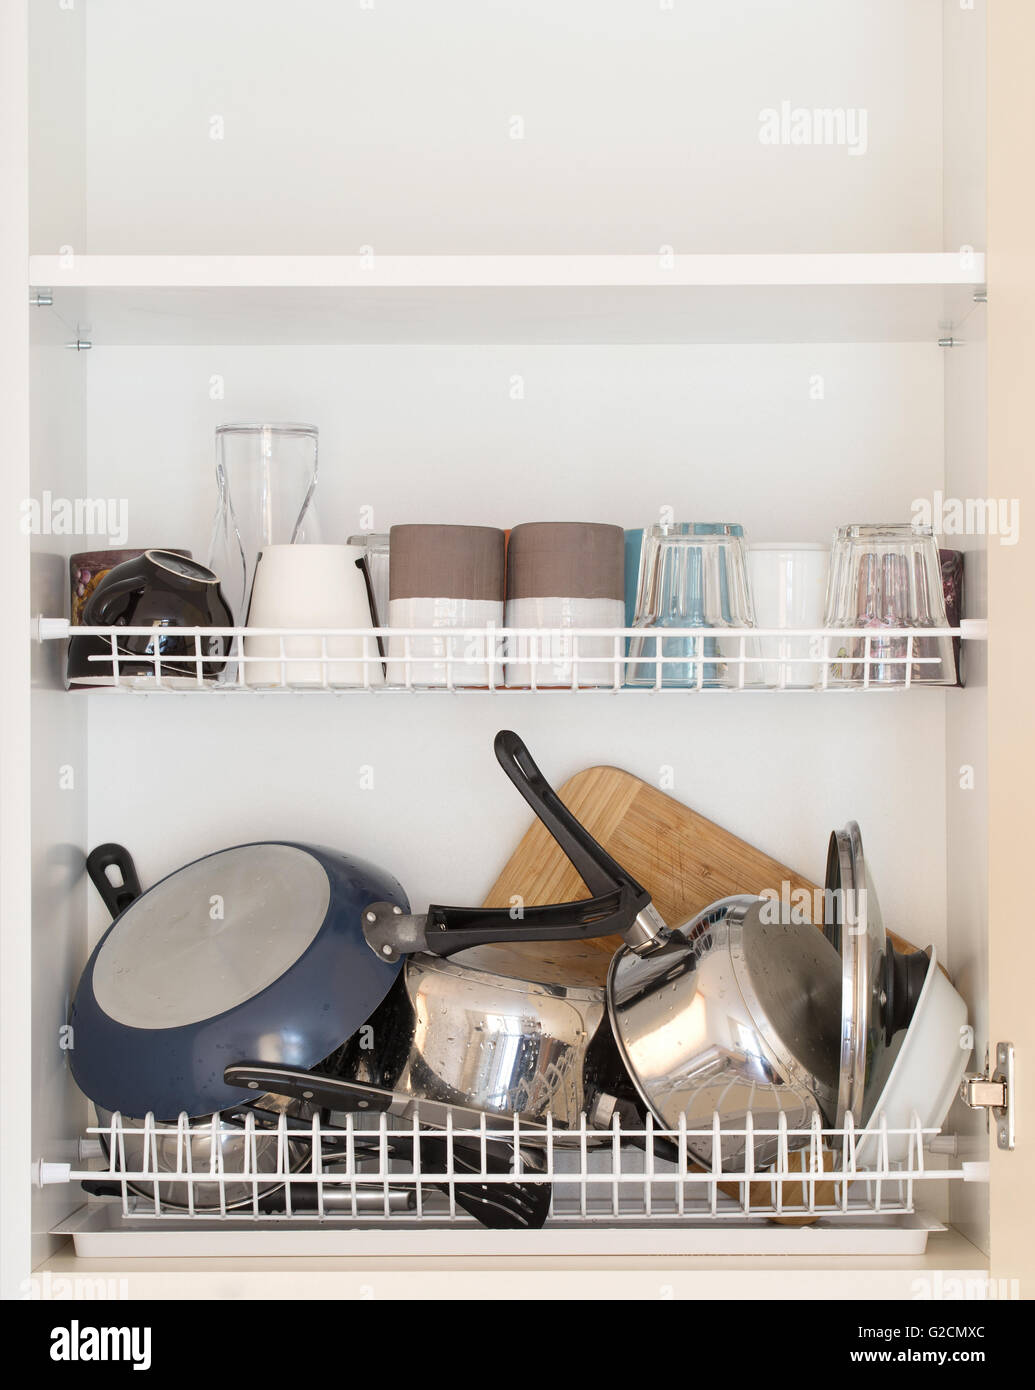 https://c8.alamy.com/comp/G2CMXC/lots-of-wet-dishes-in-the-dish-draining-closet-G2CMXC.jpg